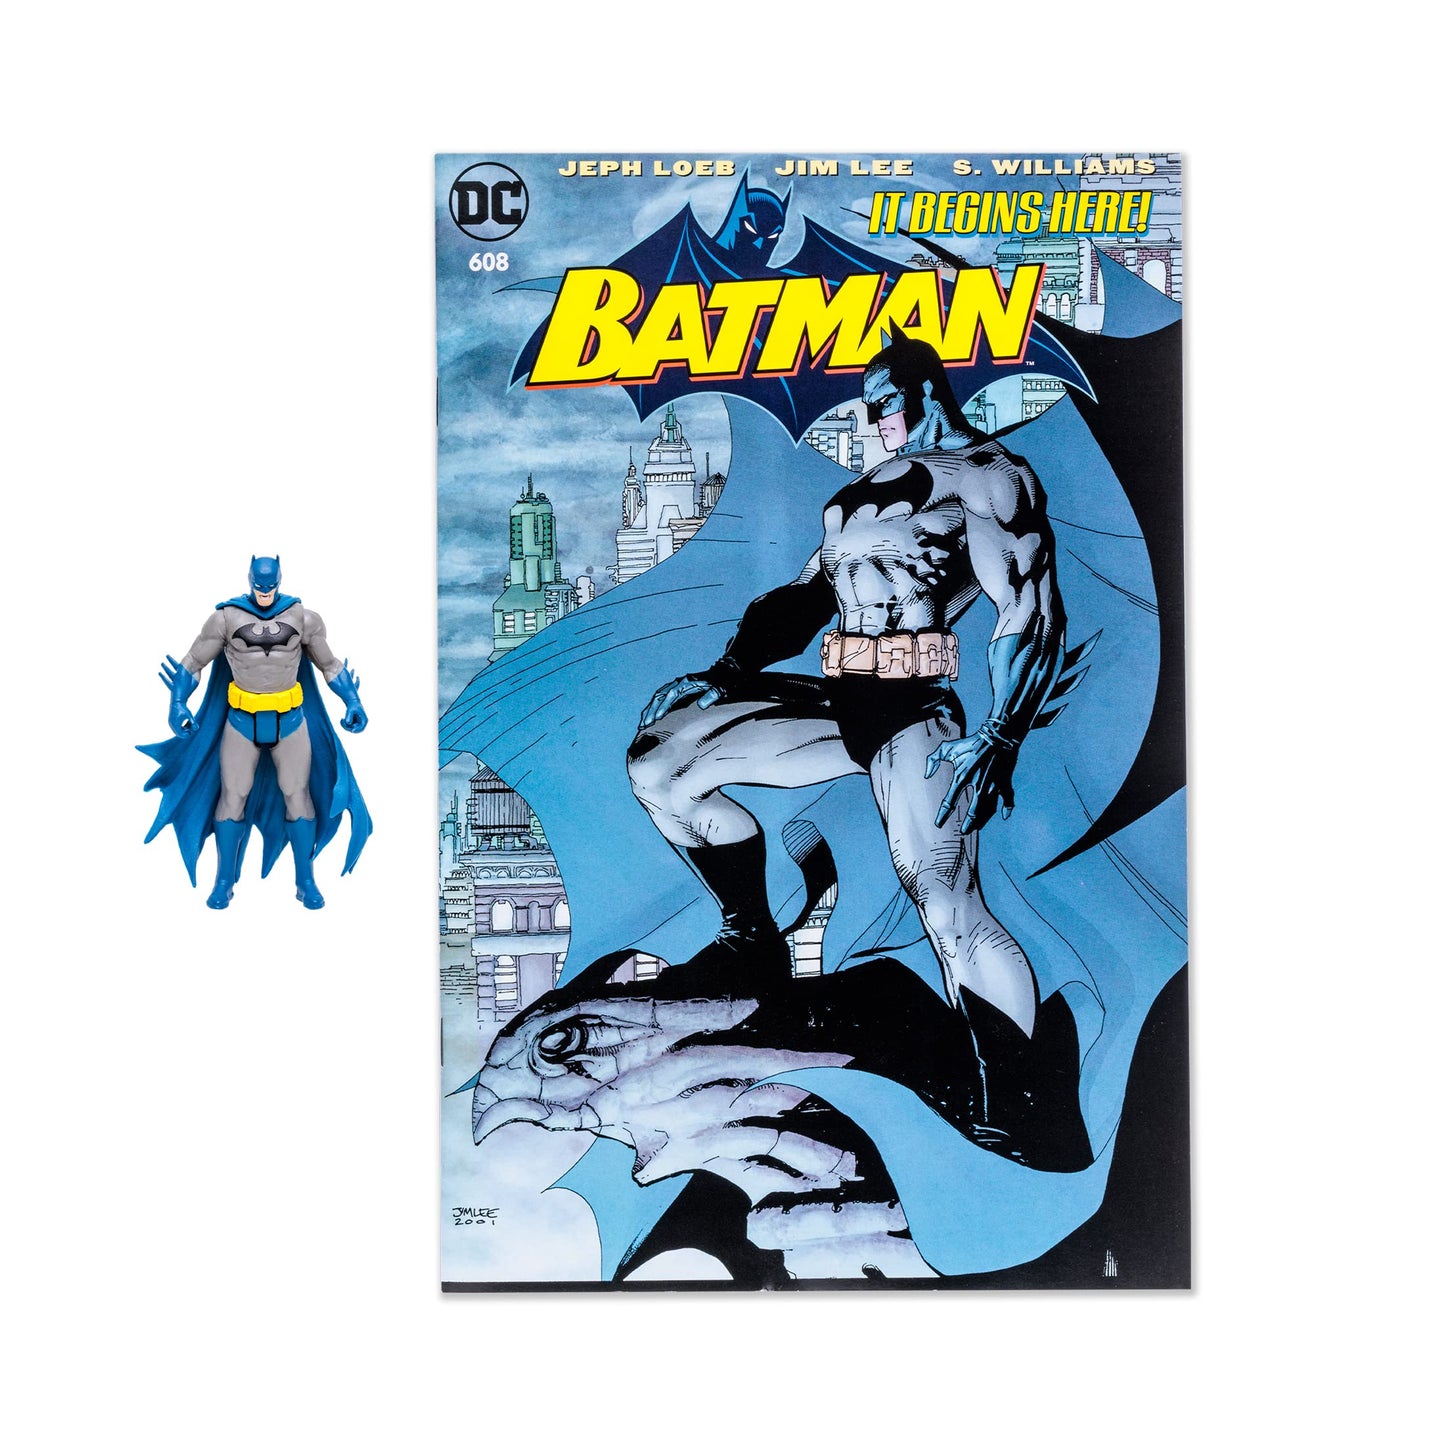 DC Comics Page Punchers Batman Book with Batman Mini Figure